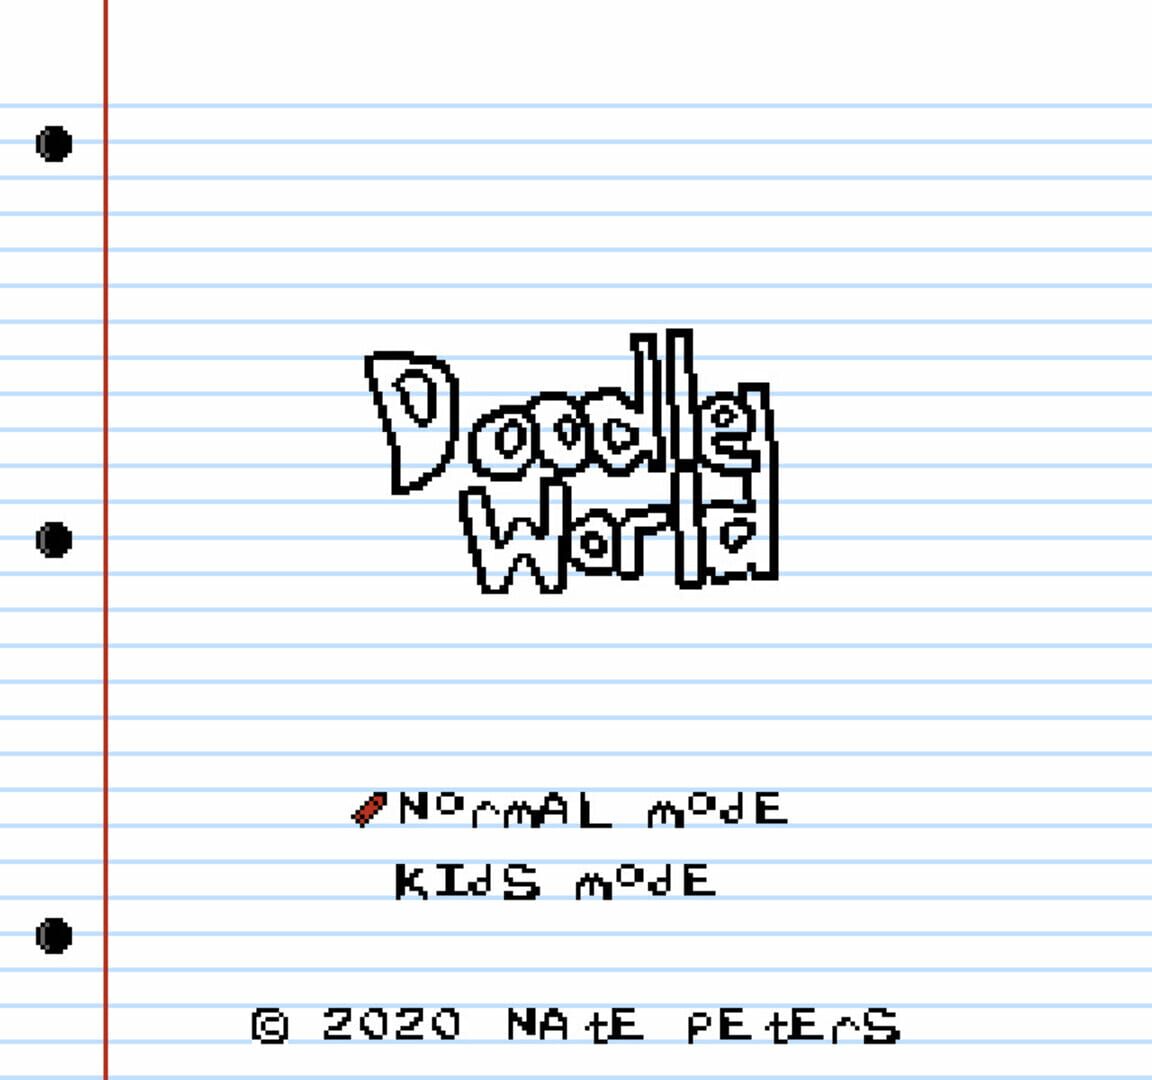 Captura de pantalla - Doodle World: Deluxe